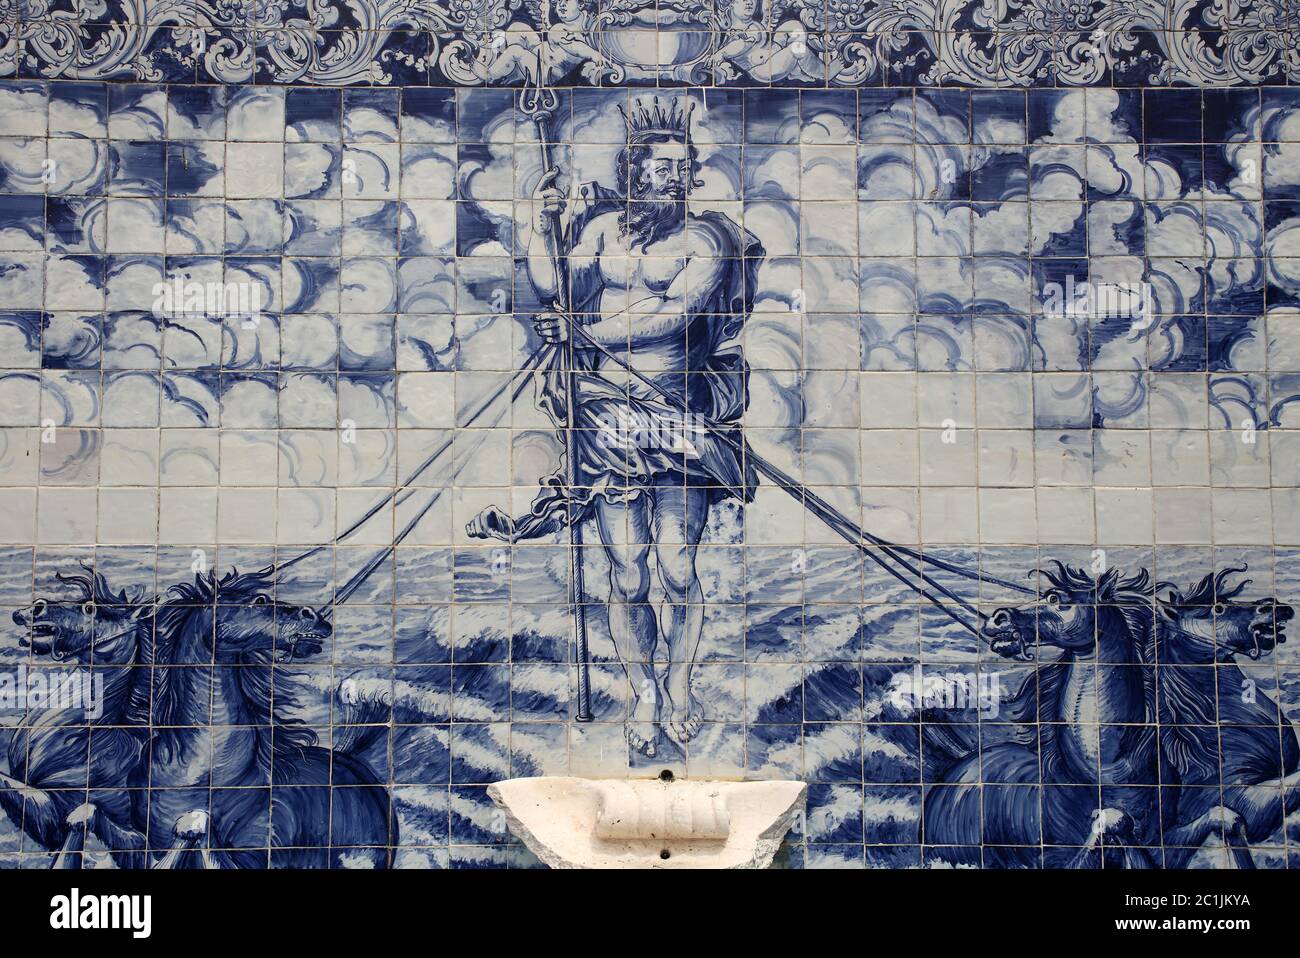 Fountain wall with historical, Portuguese, blue and white azulejo ceramic tiles depicting Neptune or Poseidon. Constancia, Santarem, Portugal. Stock Photo